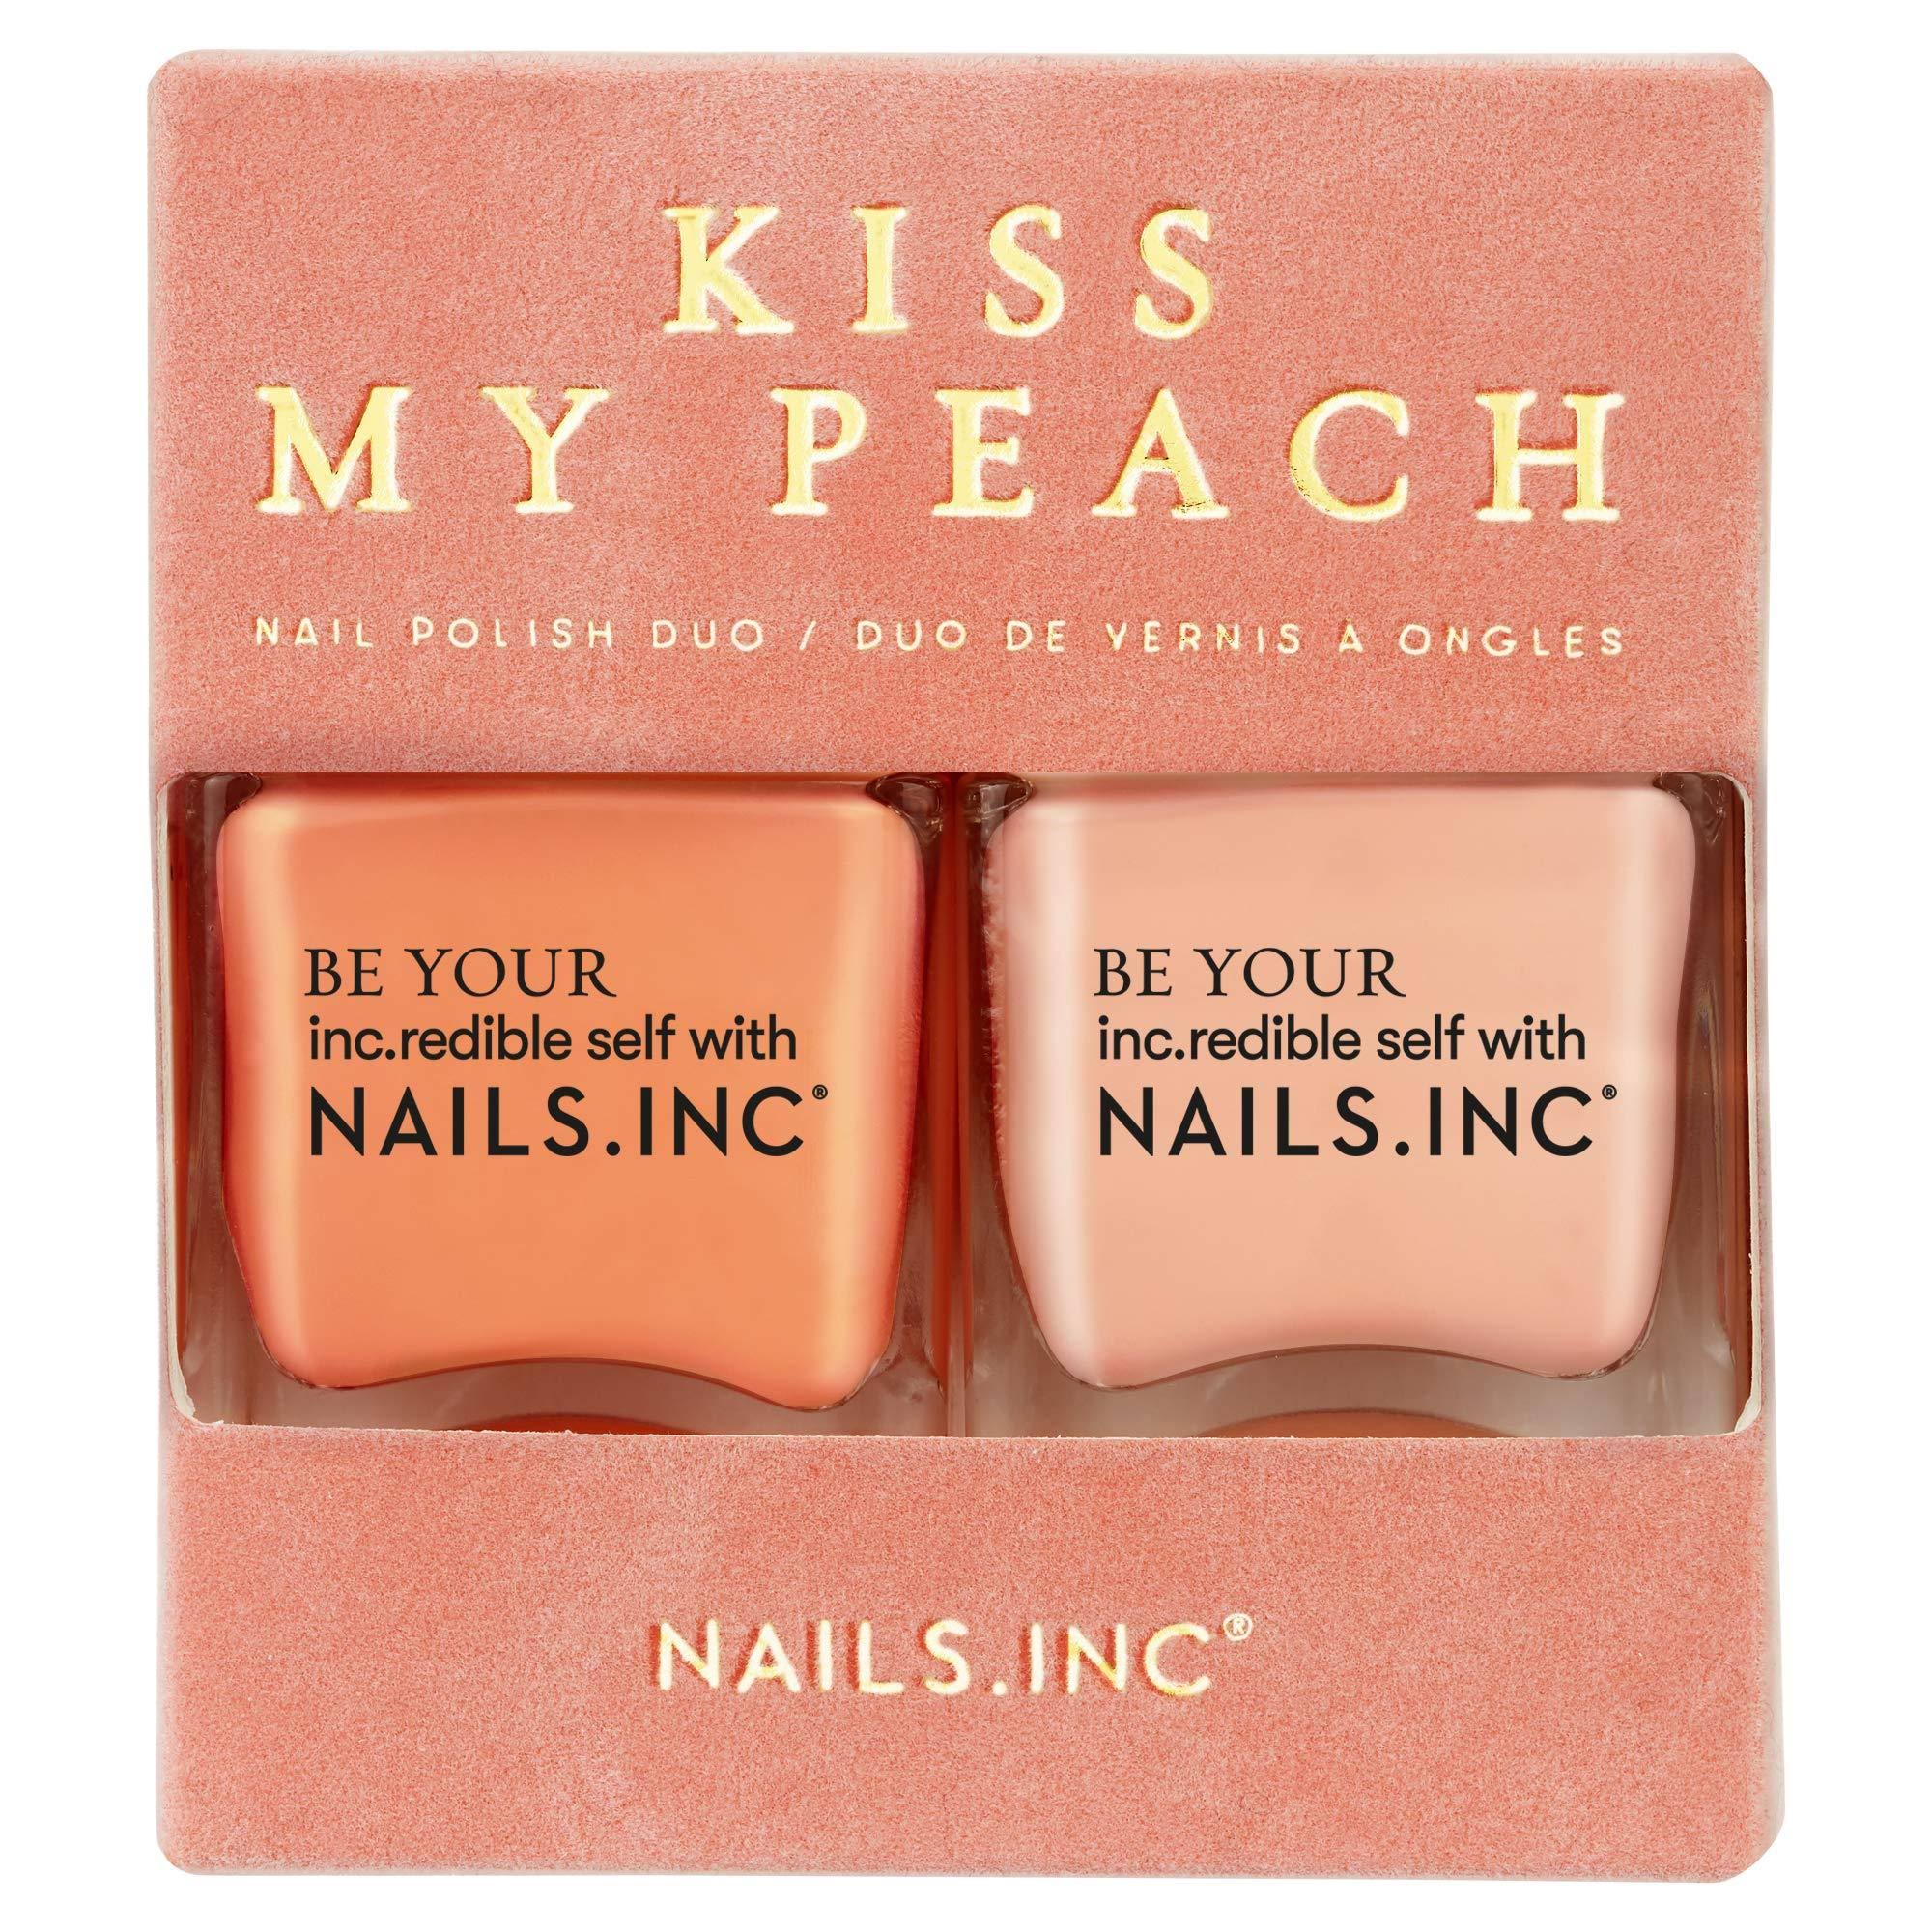 Nails Inc. Kiss My Peach Duo Nail Set